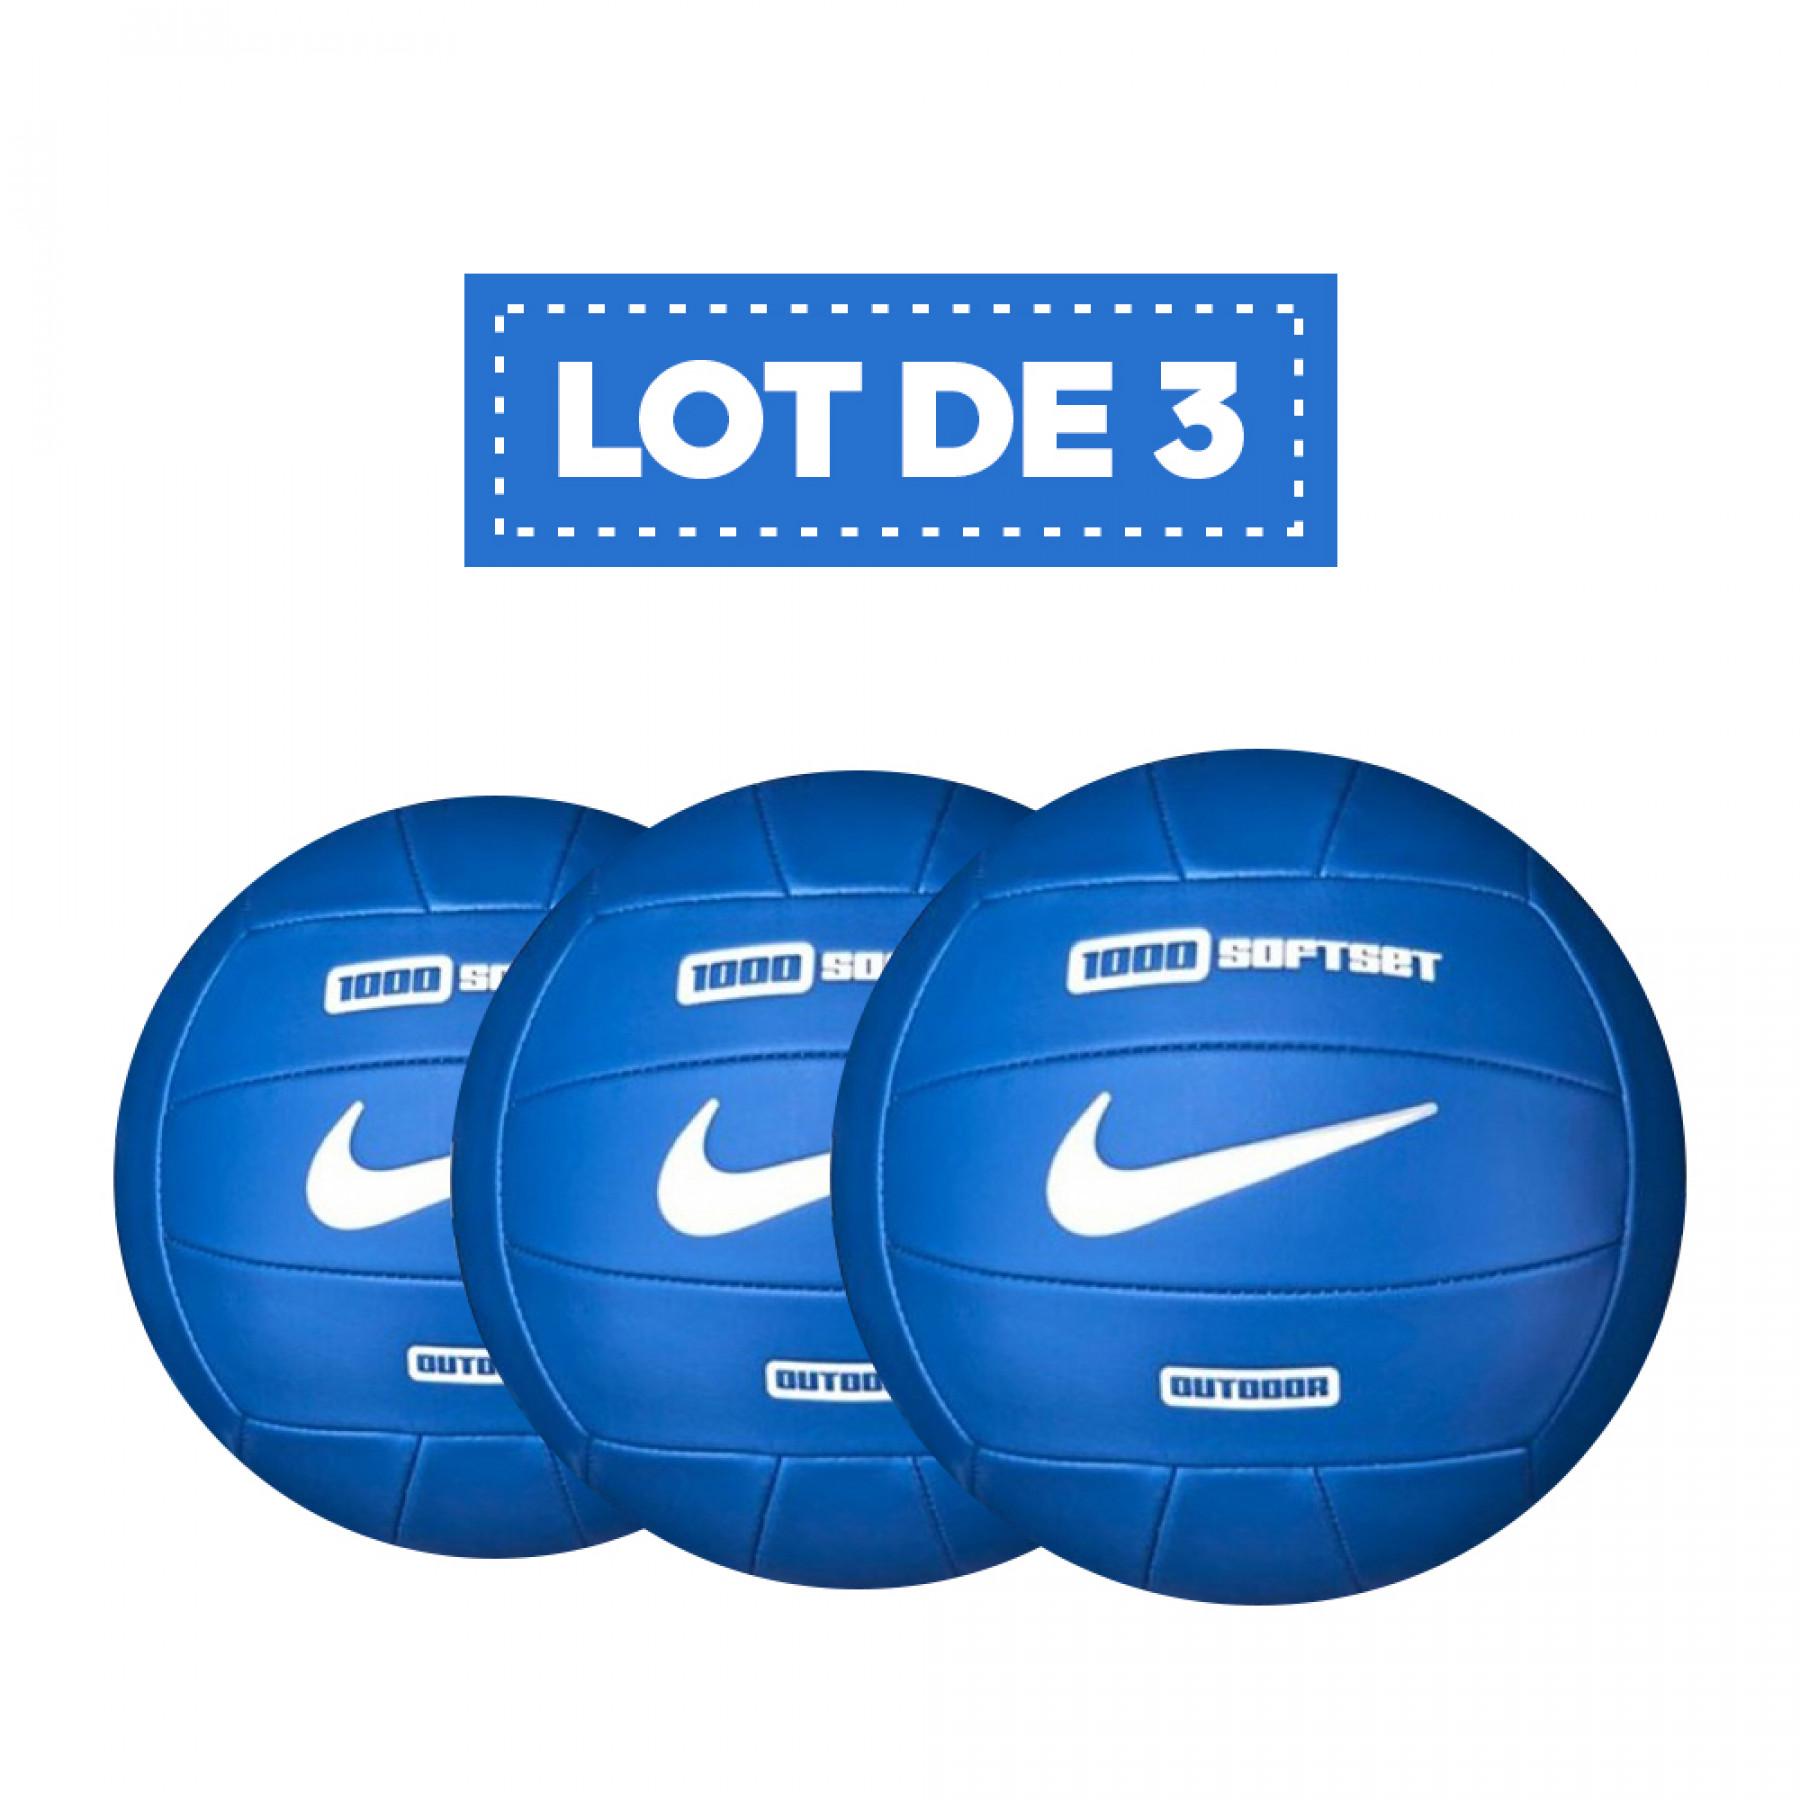 Conjunto de 3 balões Nike 1000 softset outdoor orange